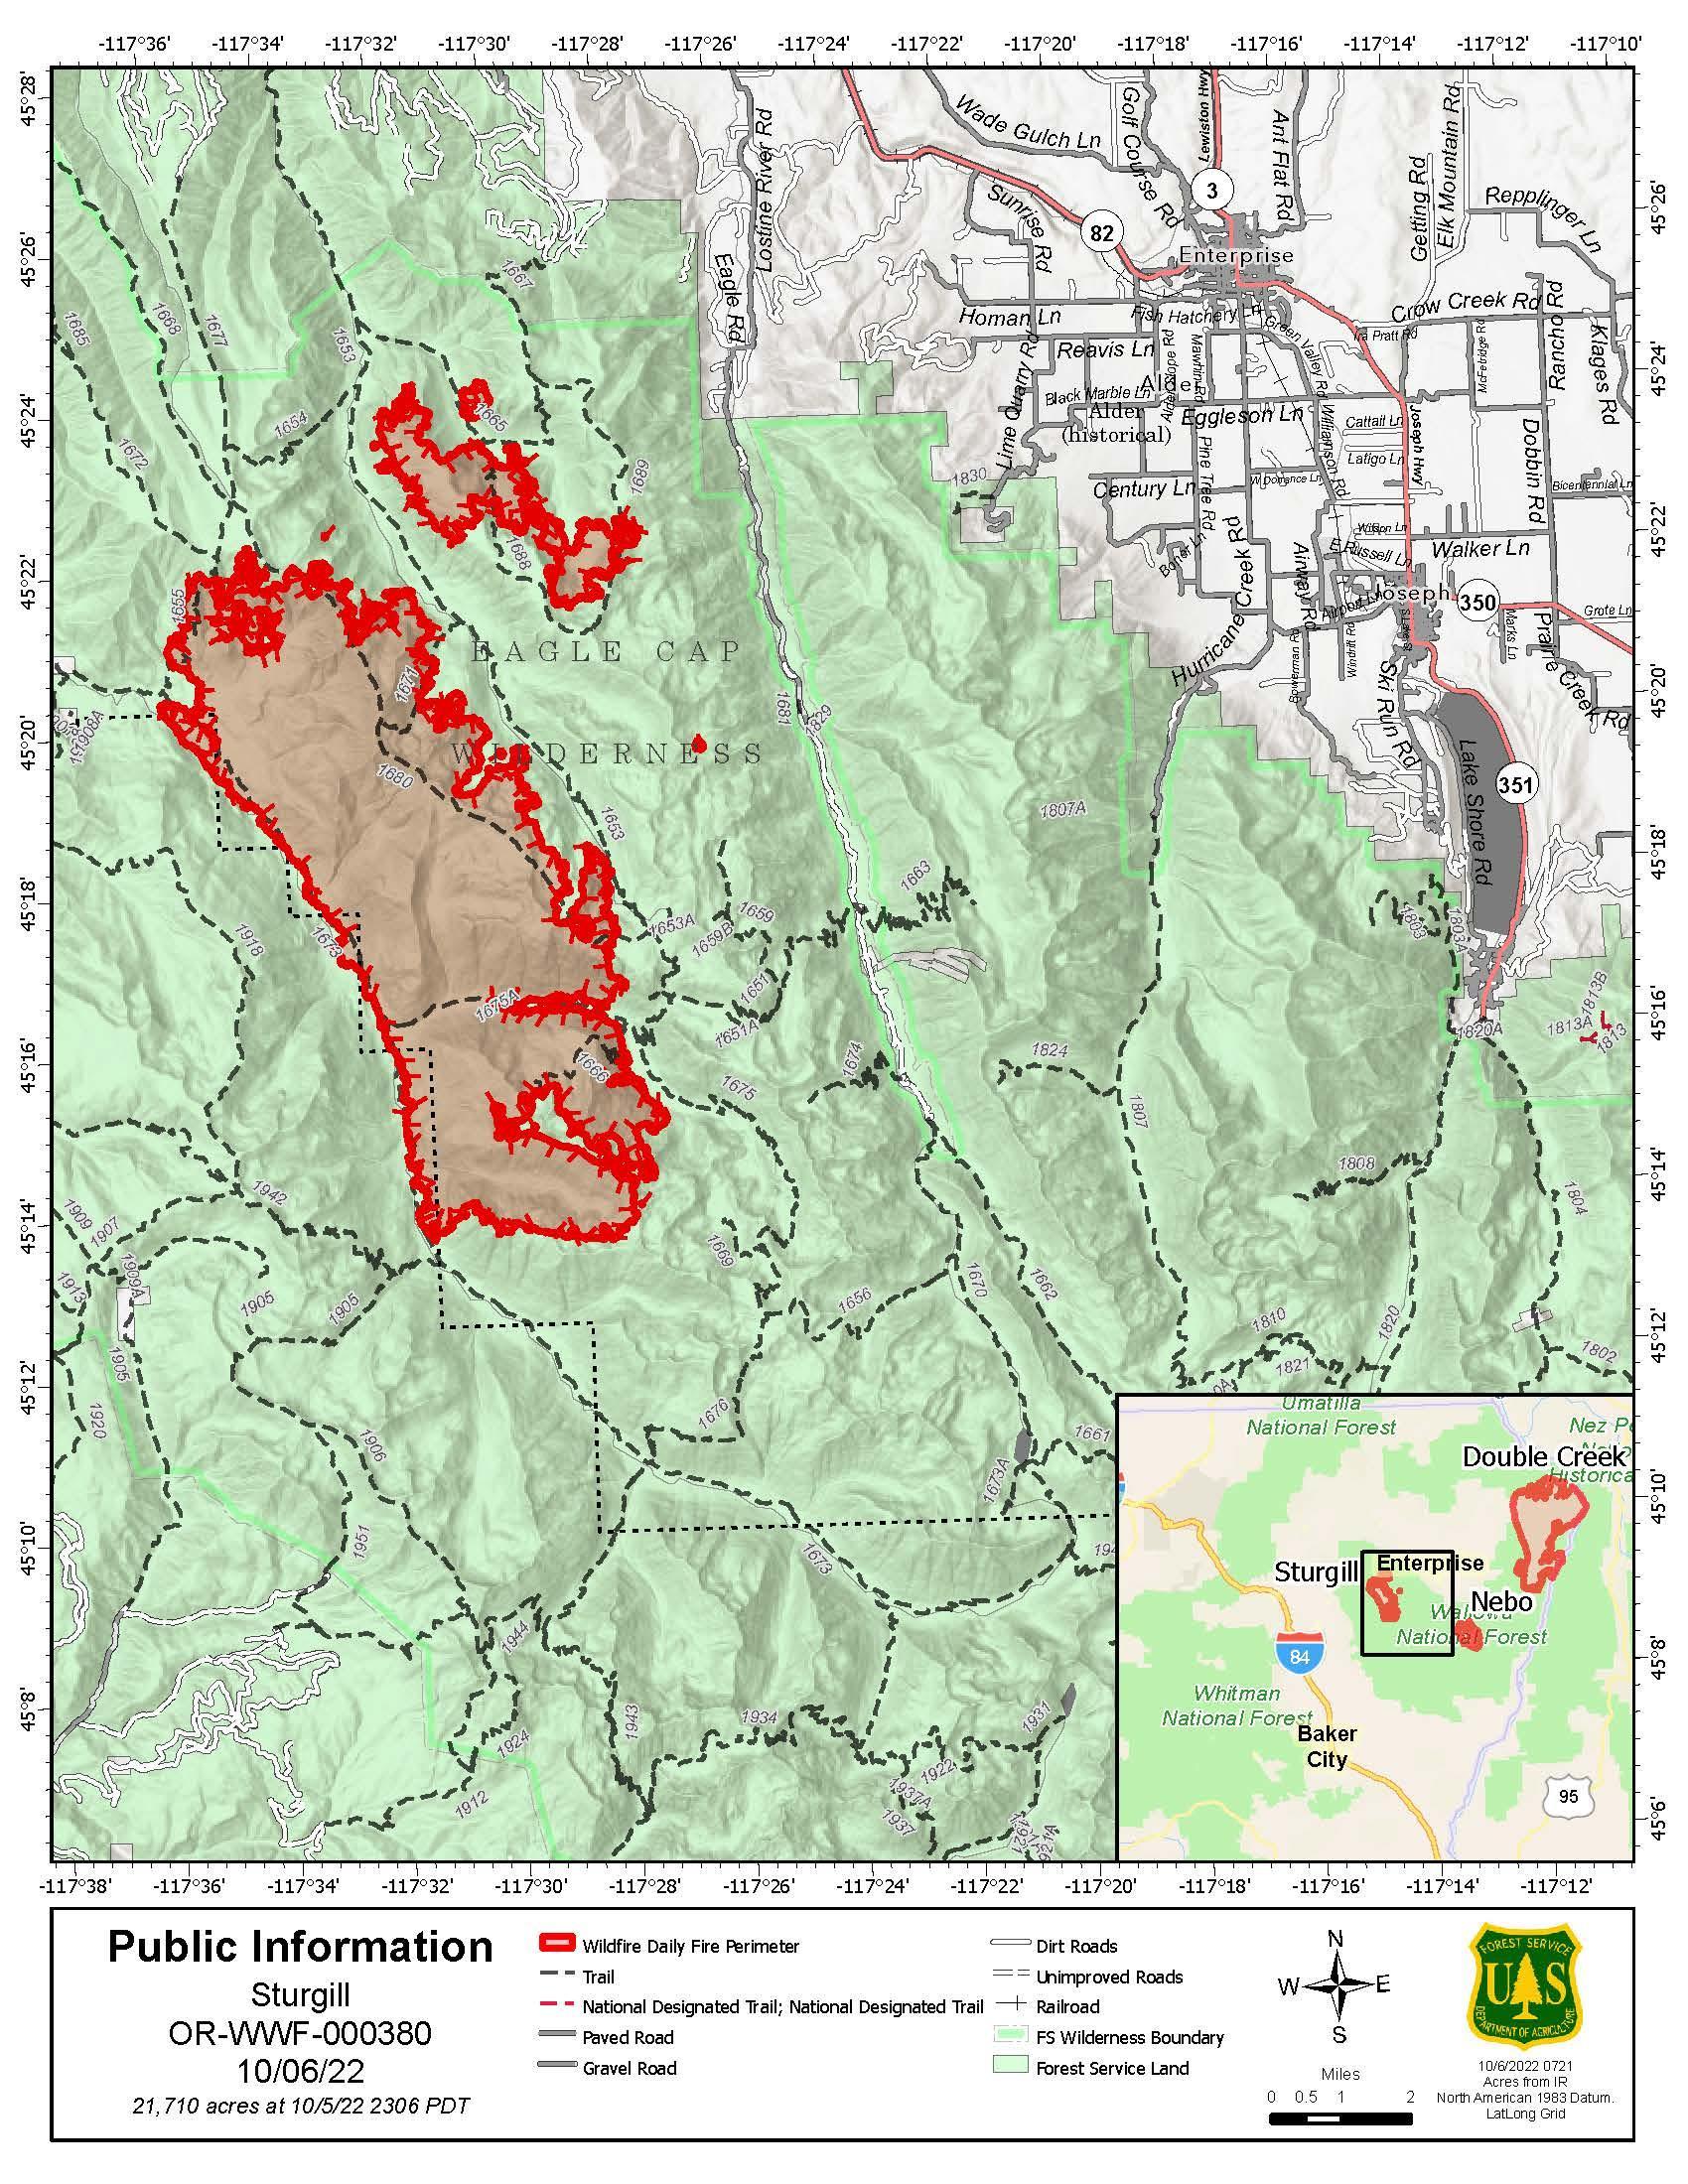 Goat Mountain2 Fire Map - 10/06/2022